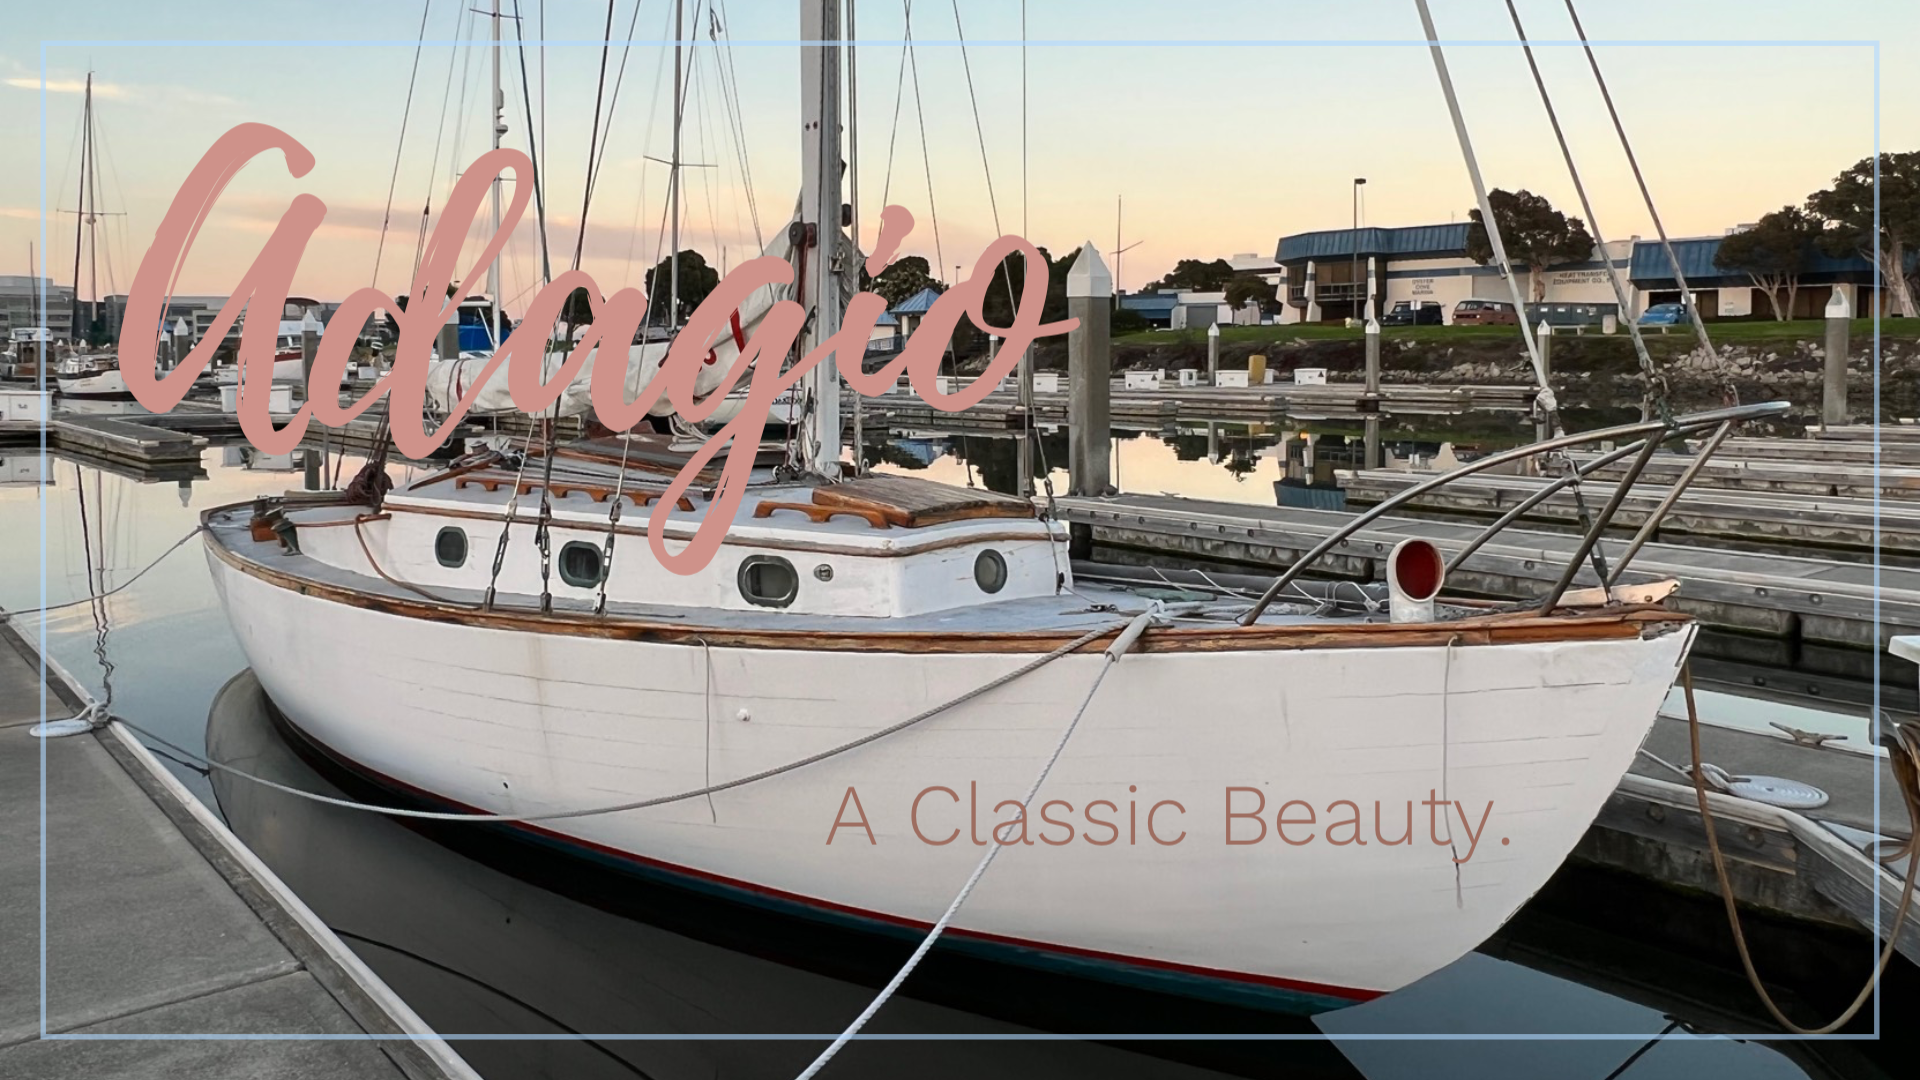 Adagio - A Classic Beauty